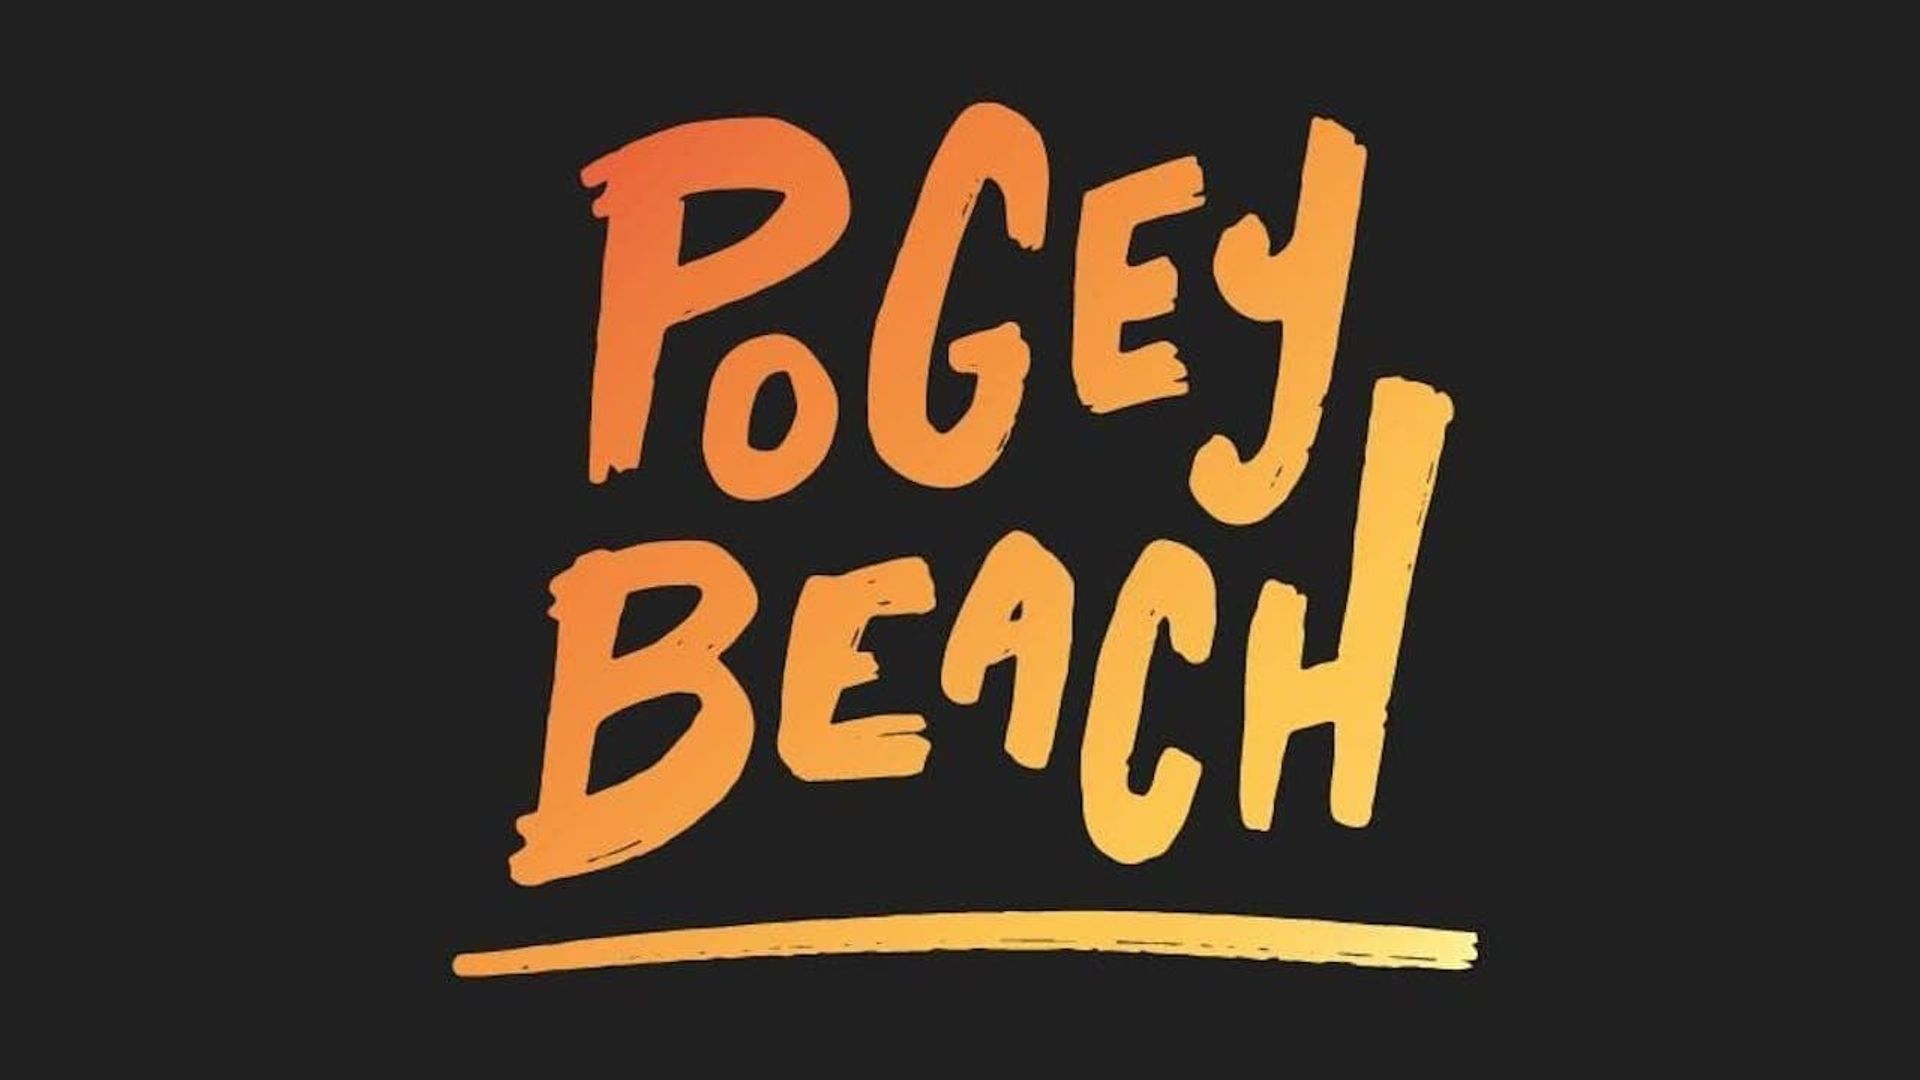 Pogey Beach background